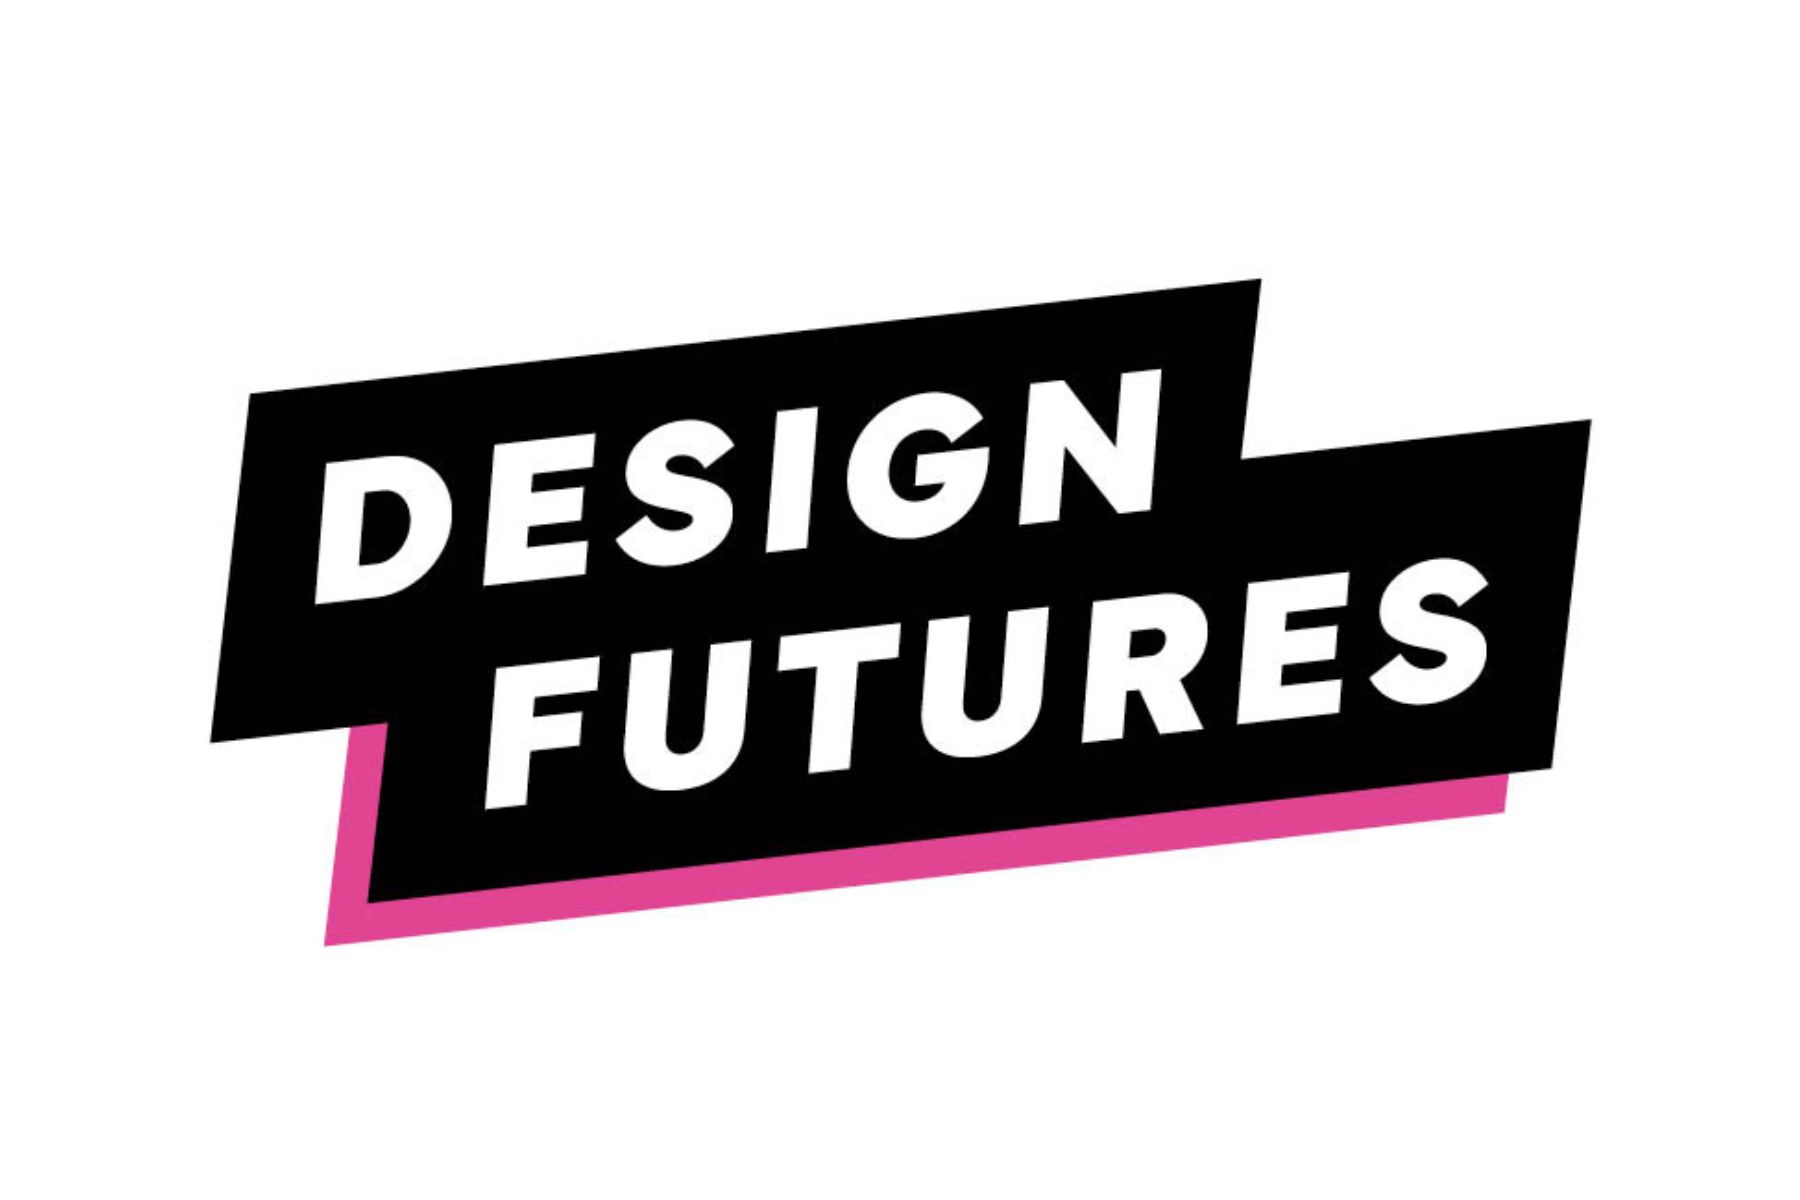 Design Futures logos